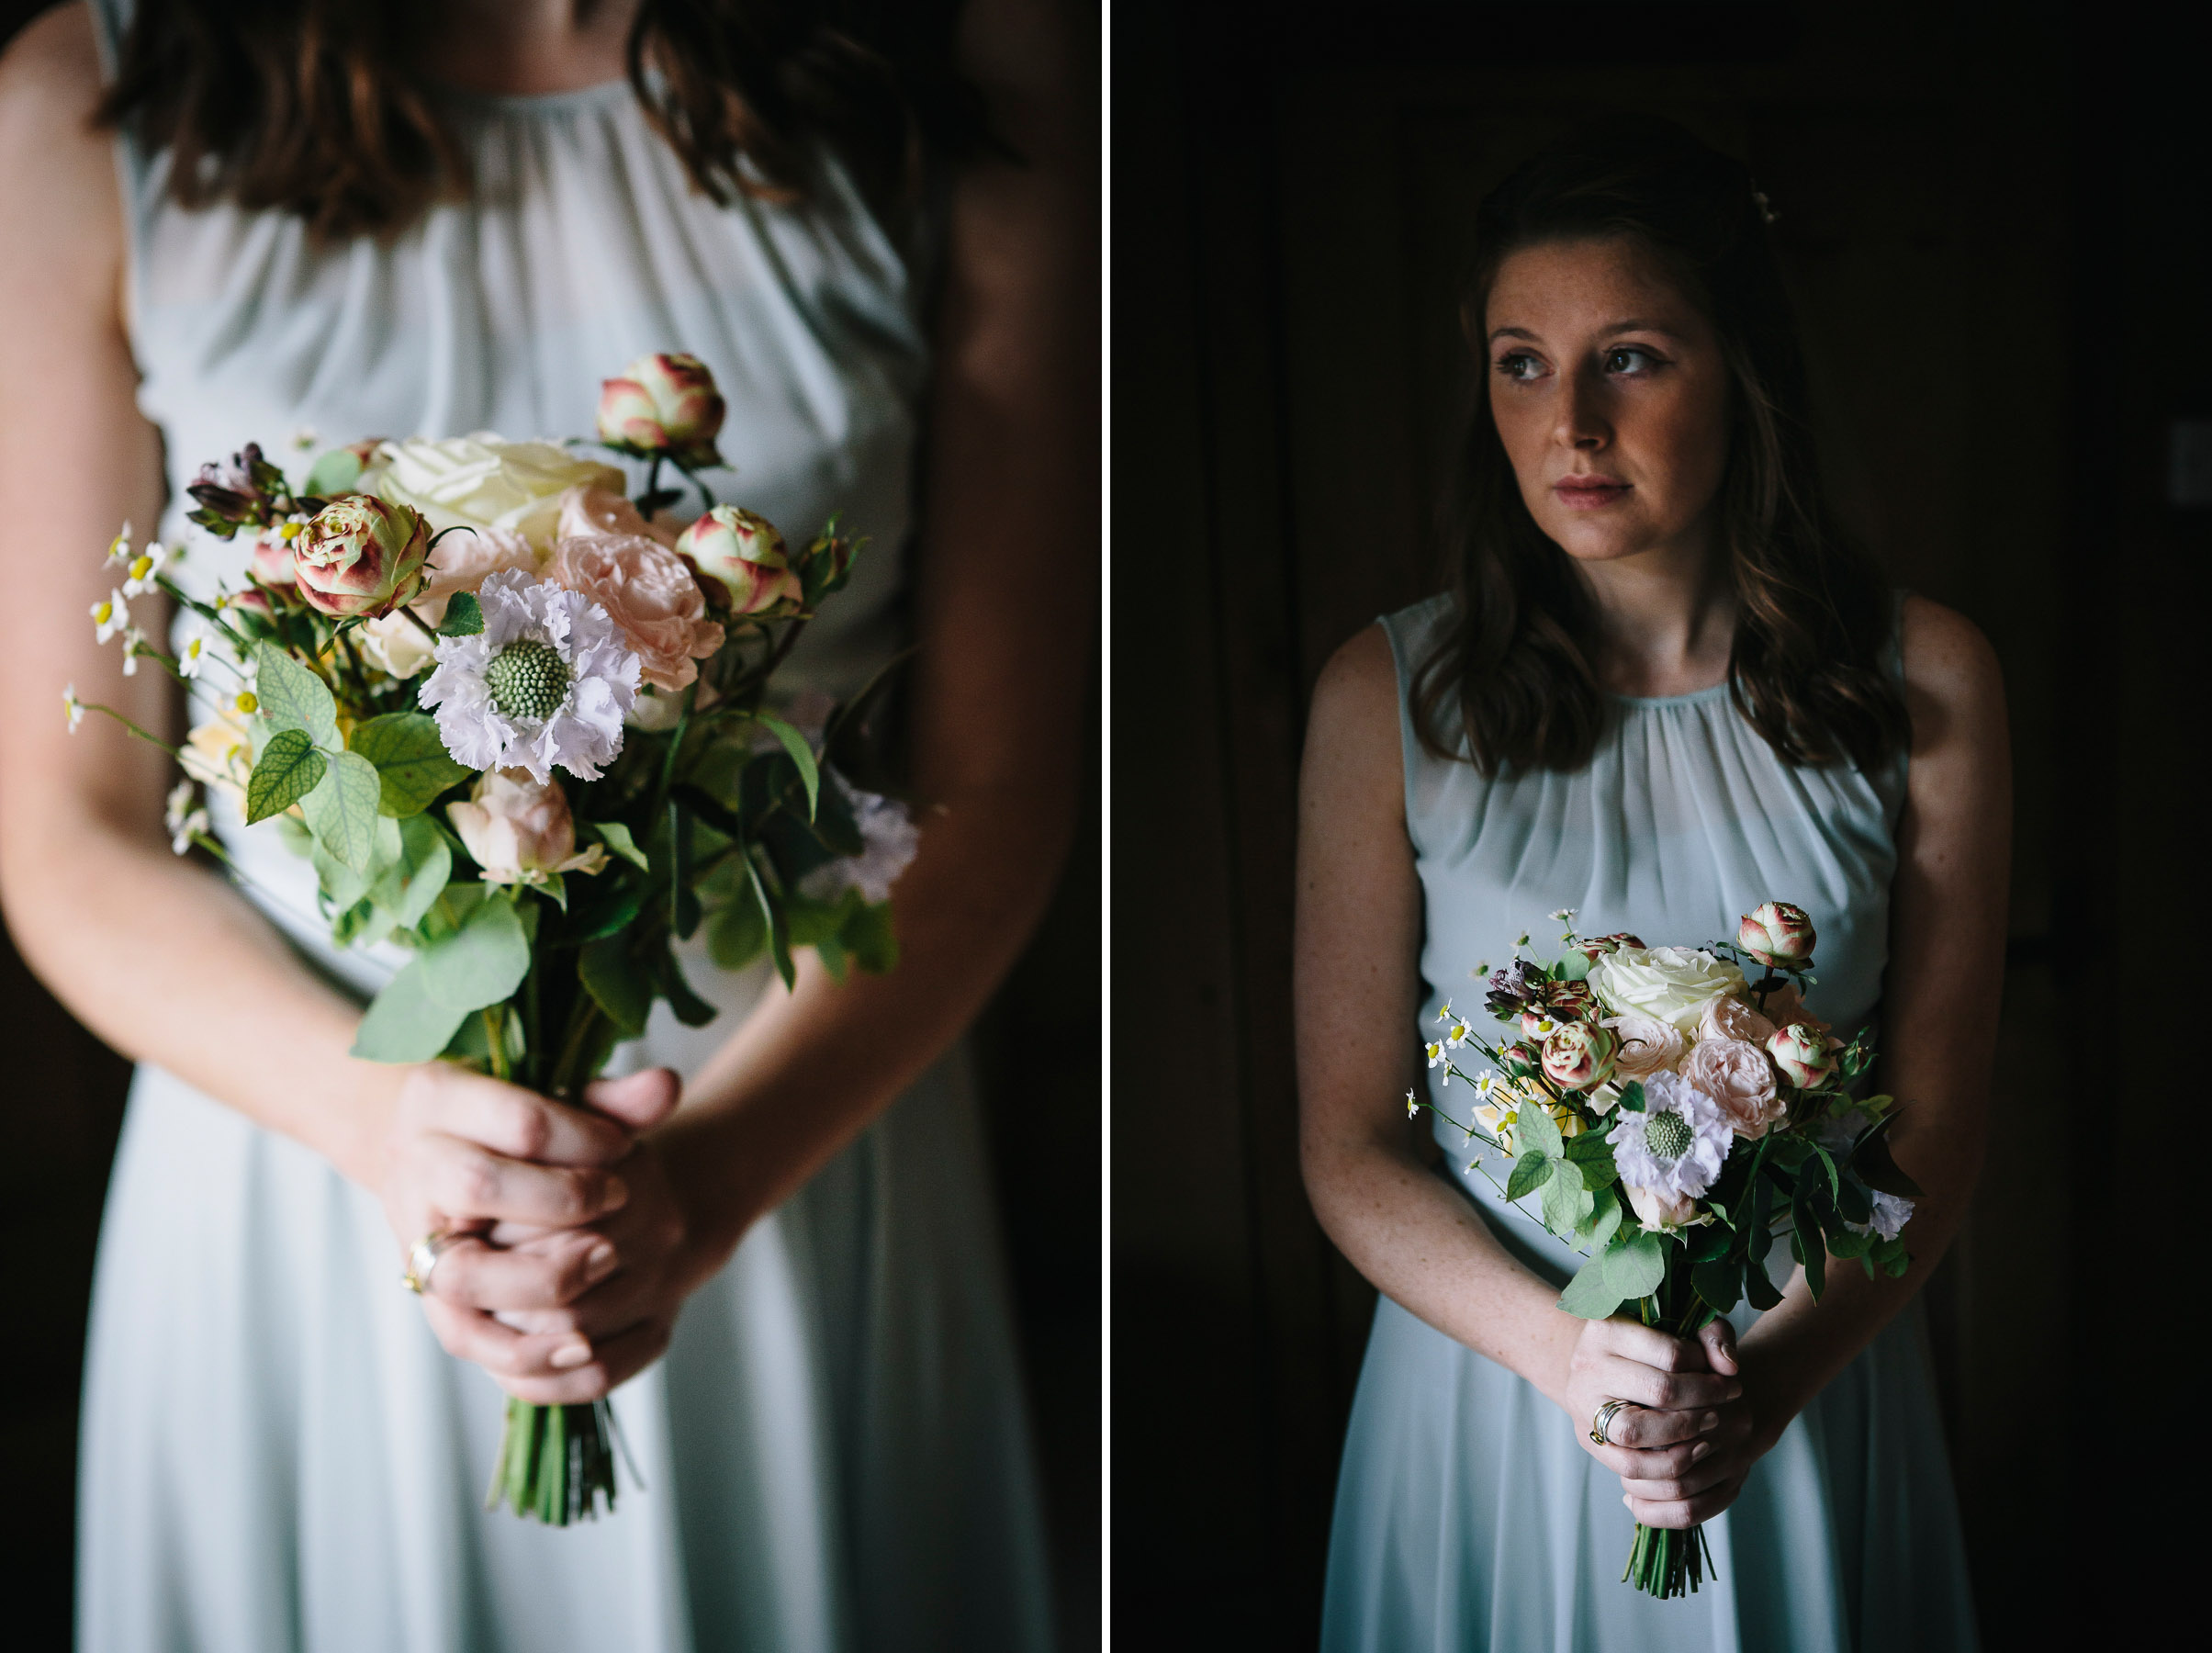 Bridesmaid's flowers